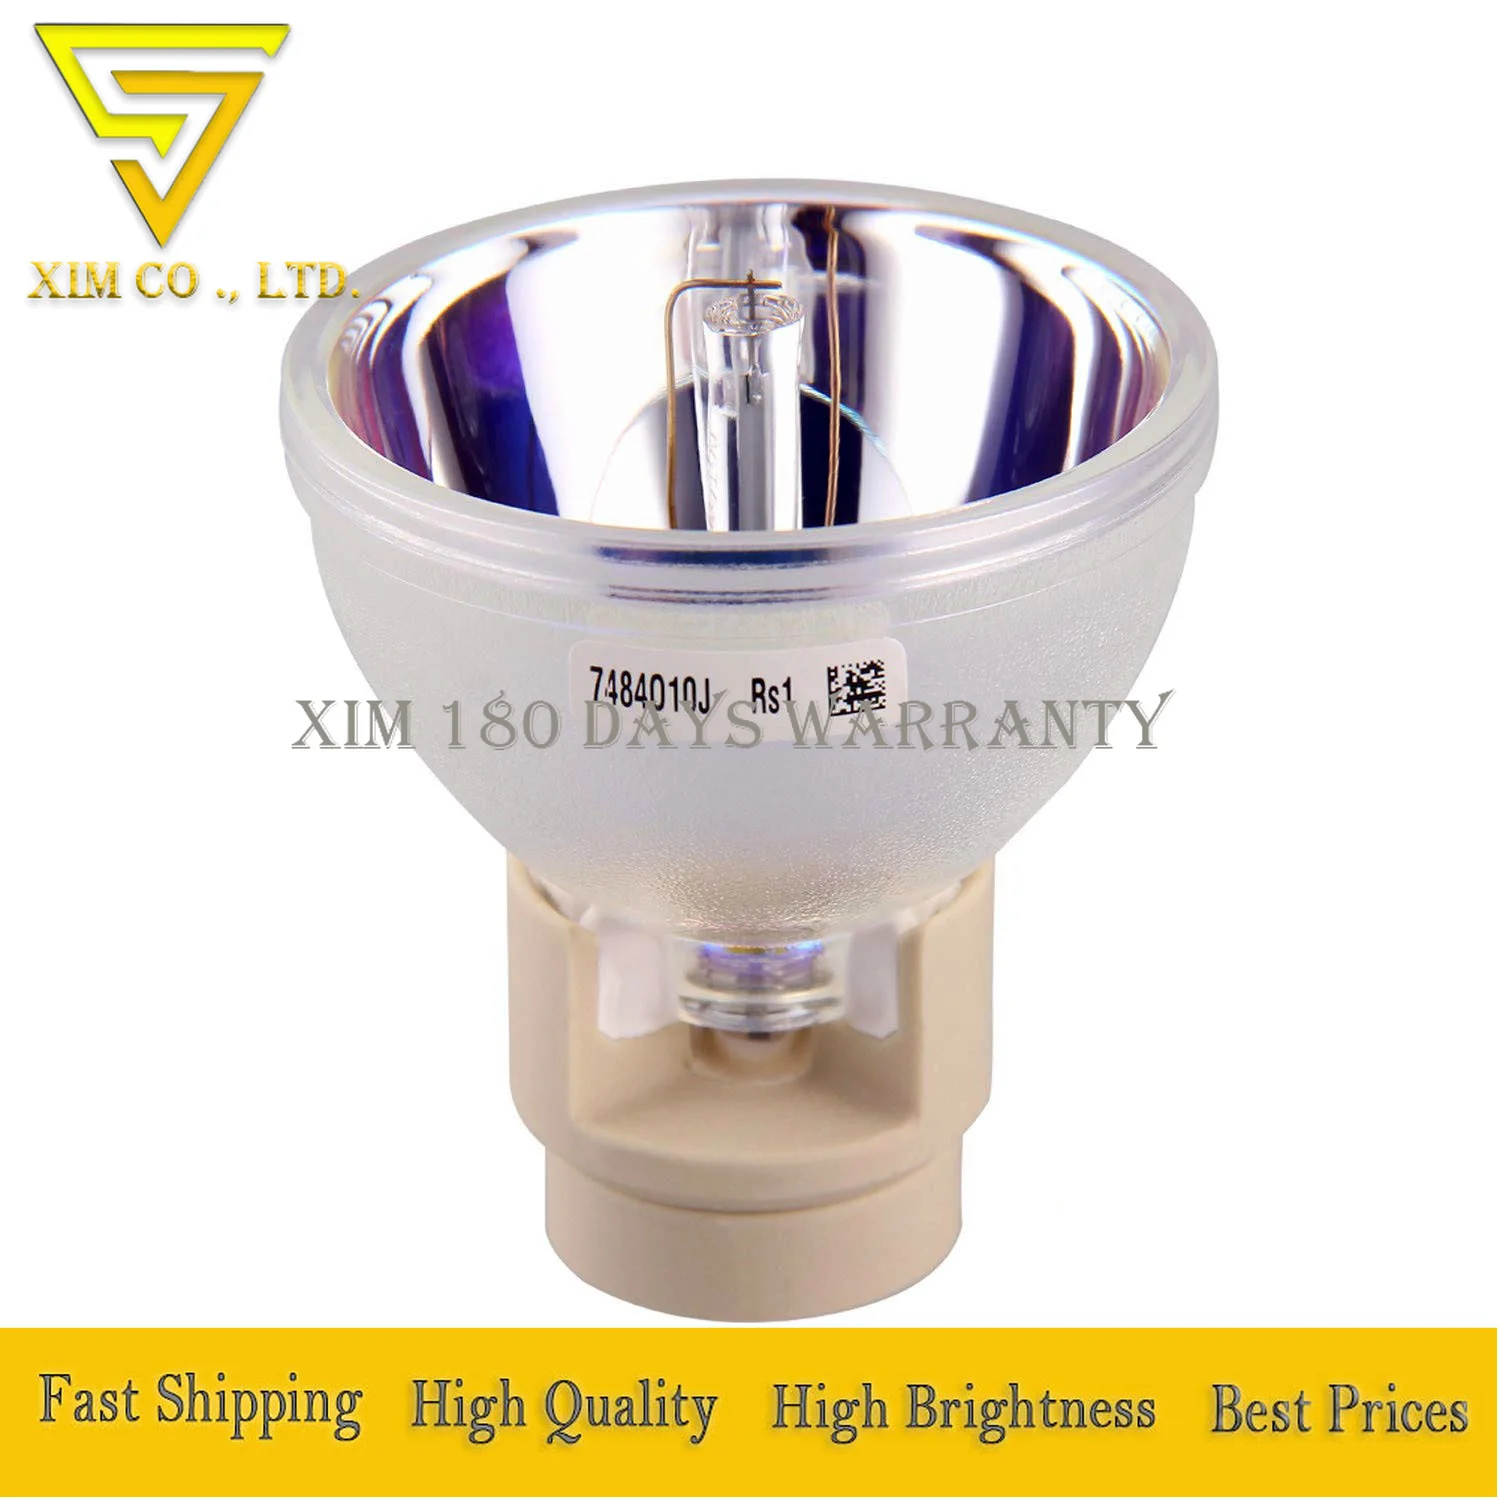 P-VIP 190/0.8 E20.9 Projector Lamp RLC-092/RLC-093 for Viewsonic PJD5155 PJD5255 PJD5555W PJD5153 PJD5553LWS PJD5353LS PJD6550LW